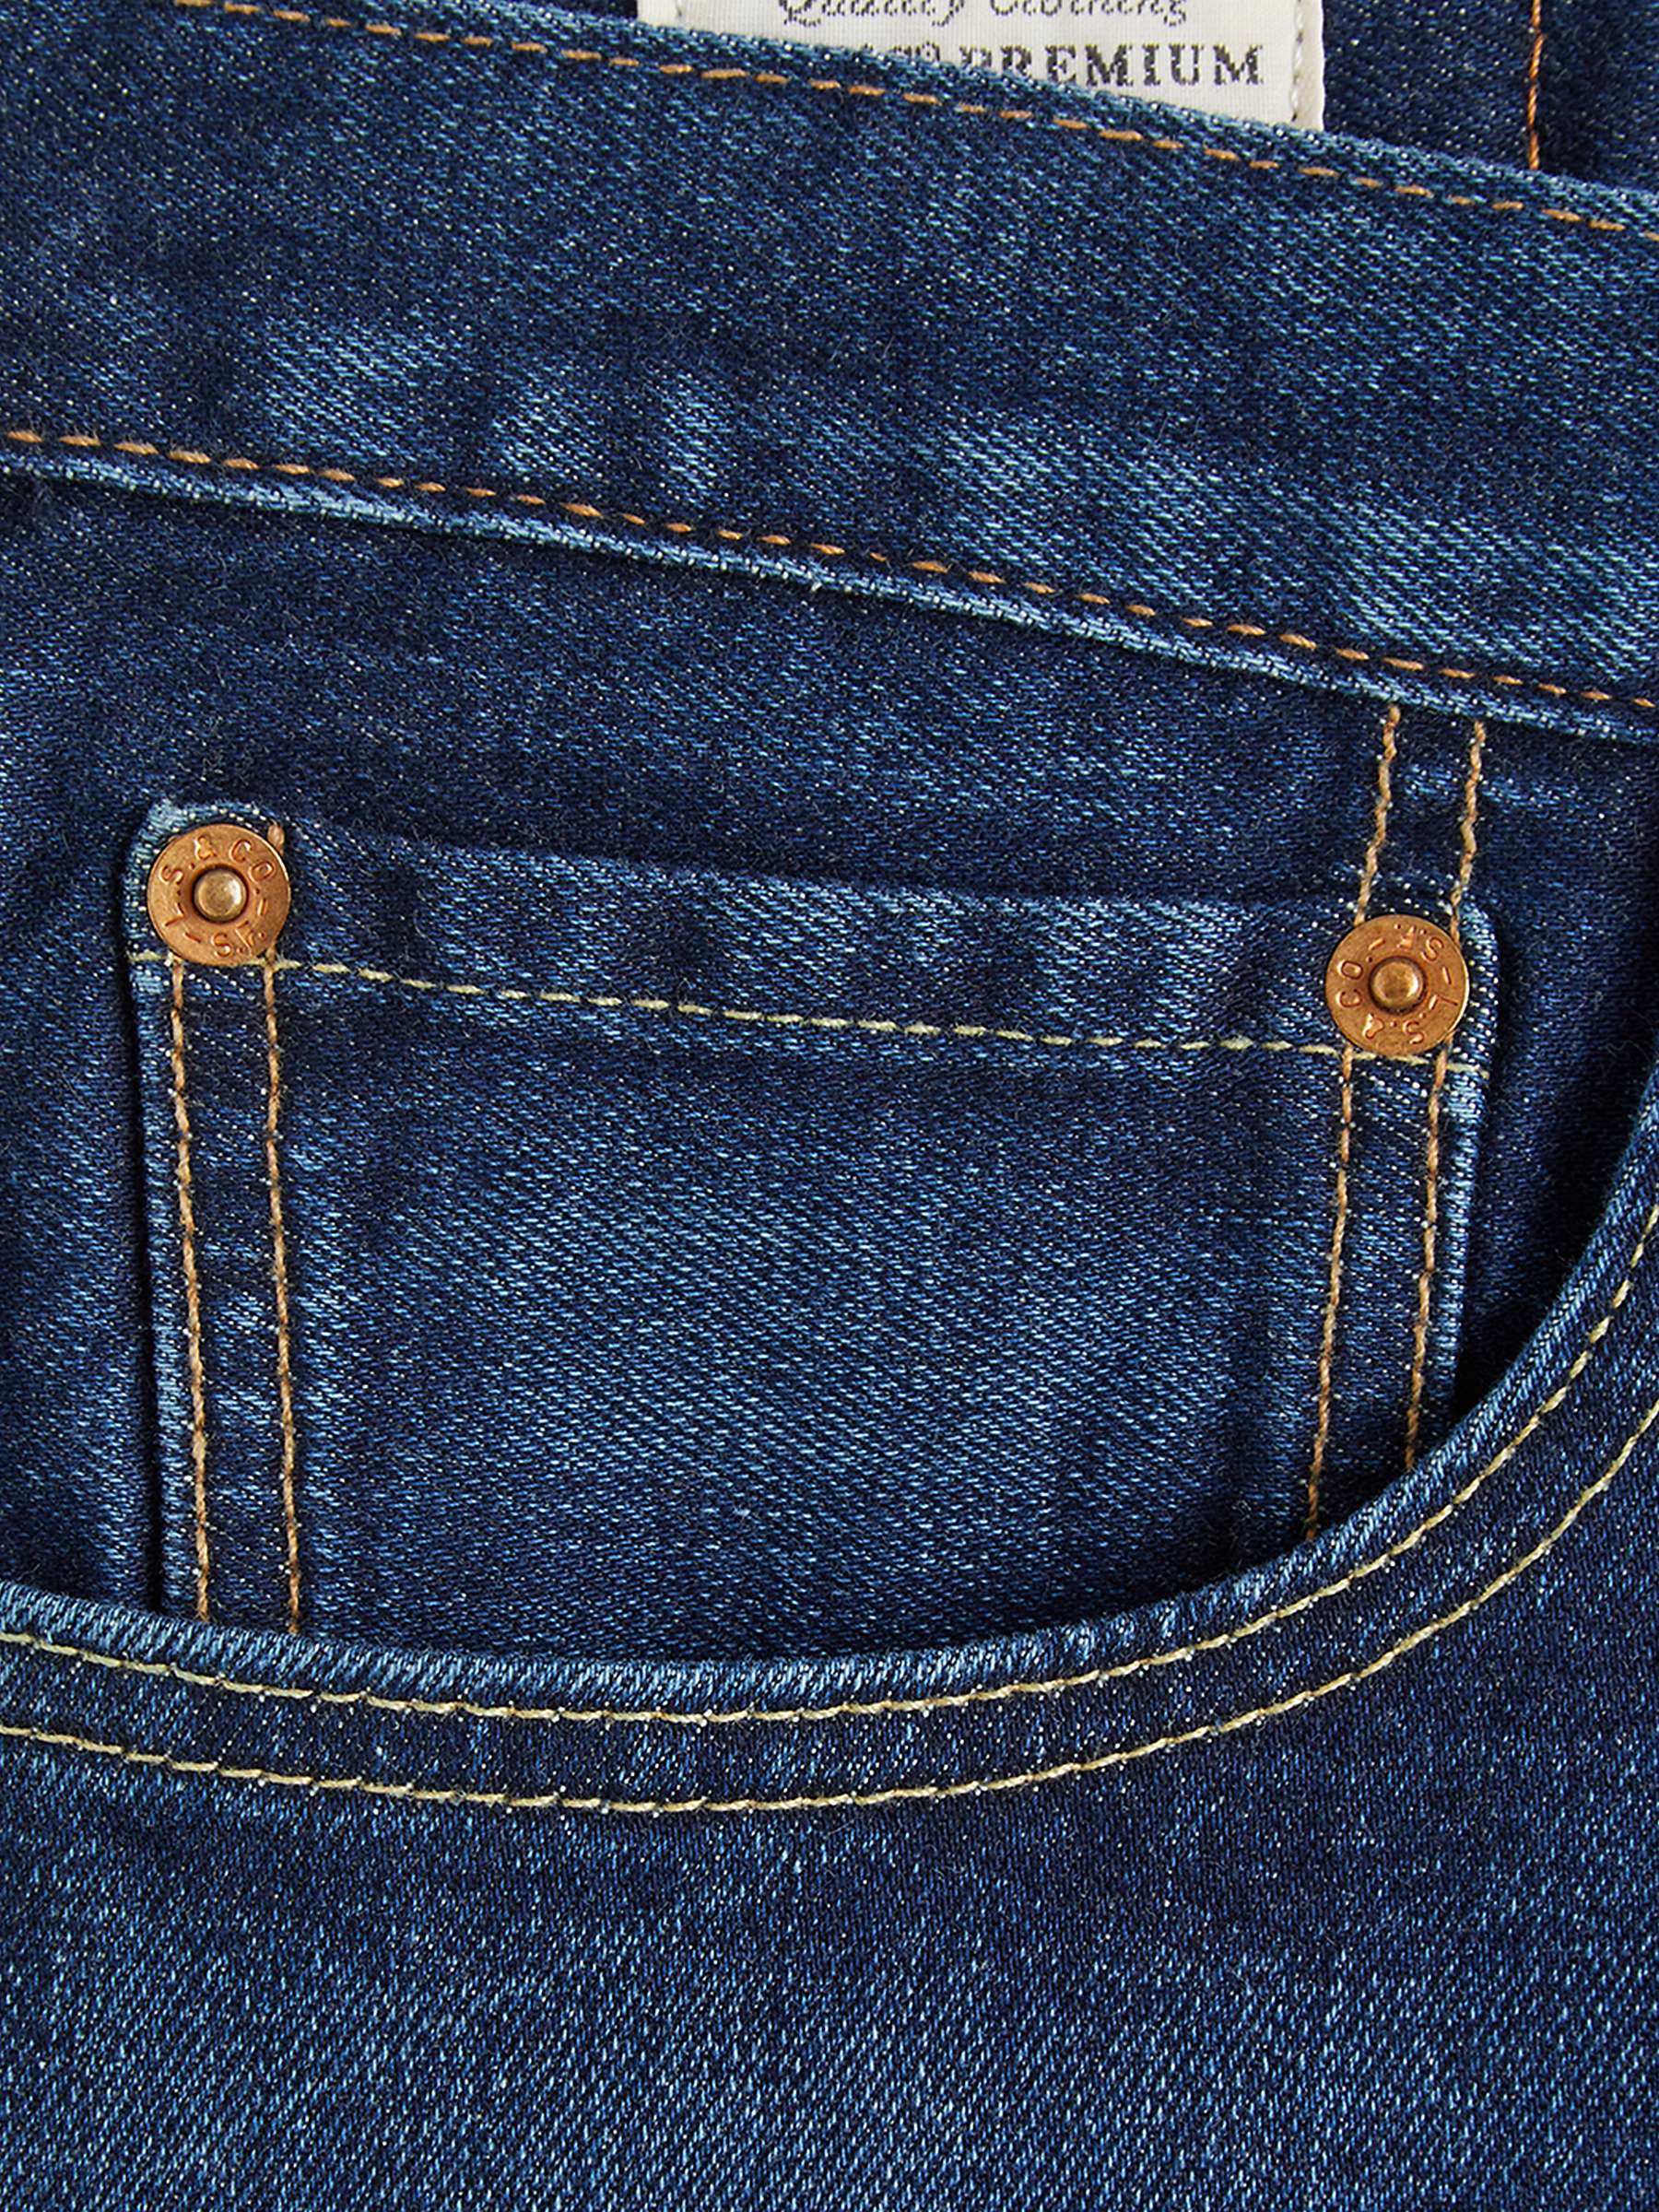 Buy Levi's 501 Original Straight Jeans, Do The Rump Online at johnlewis.com